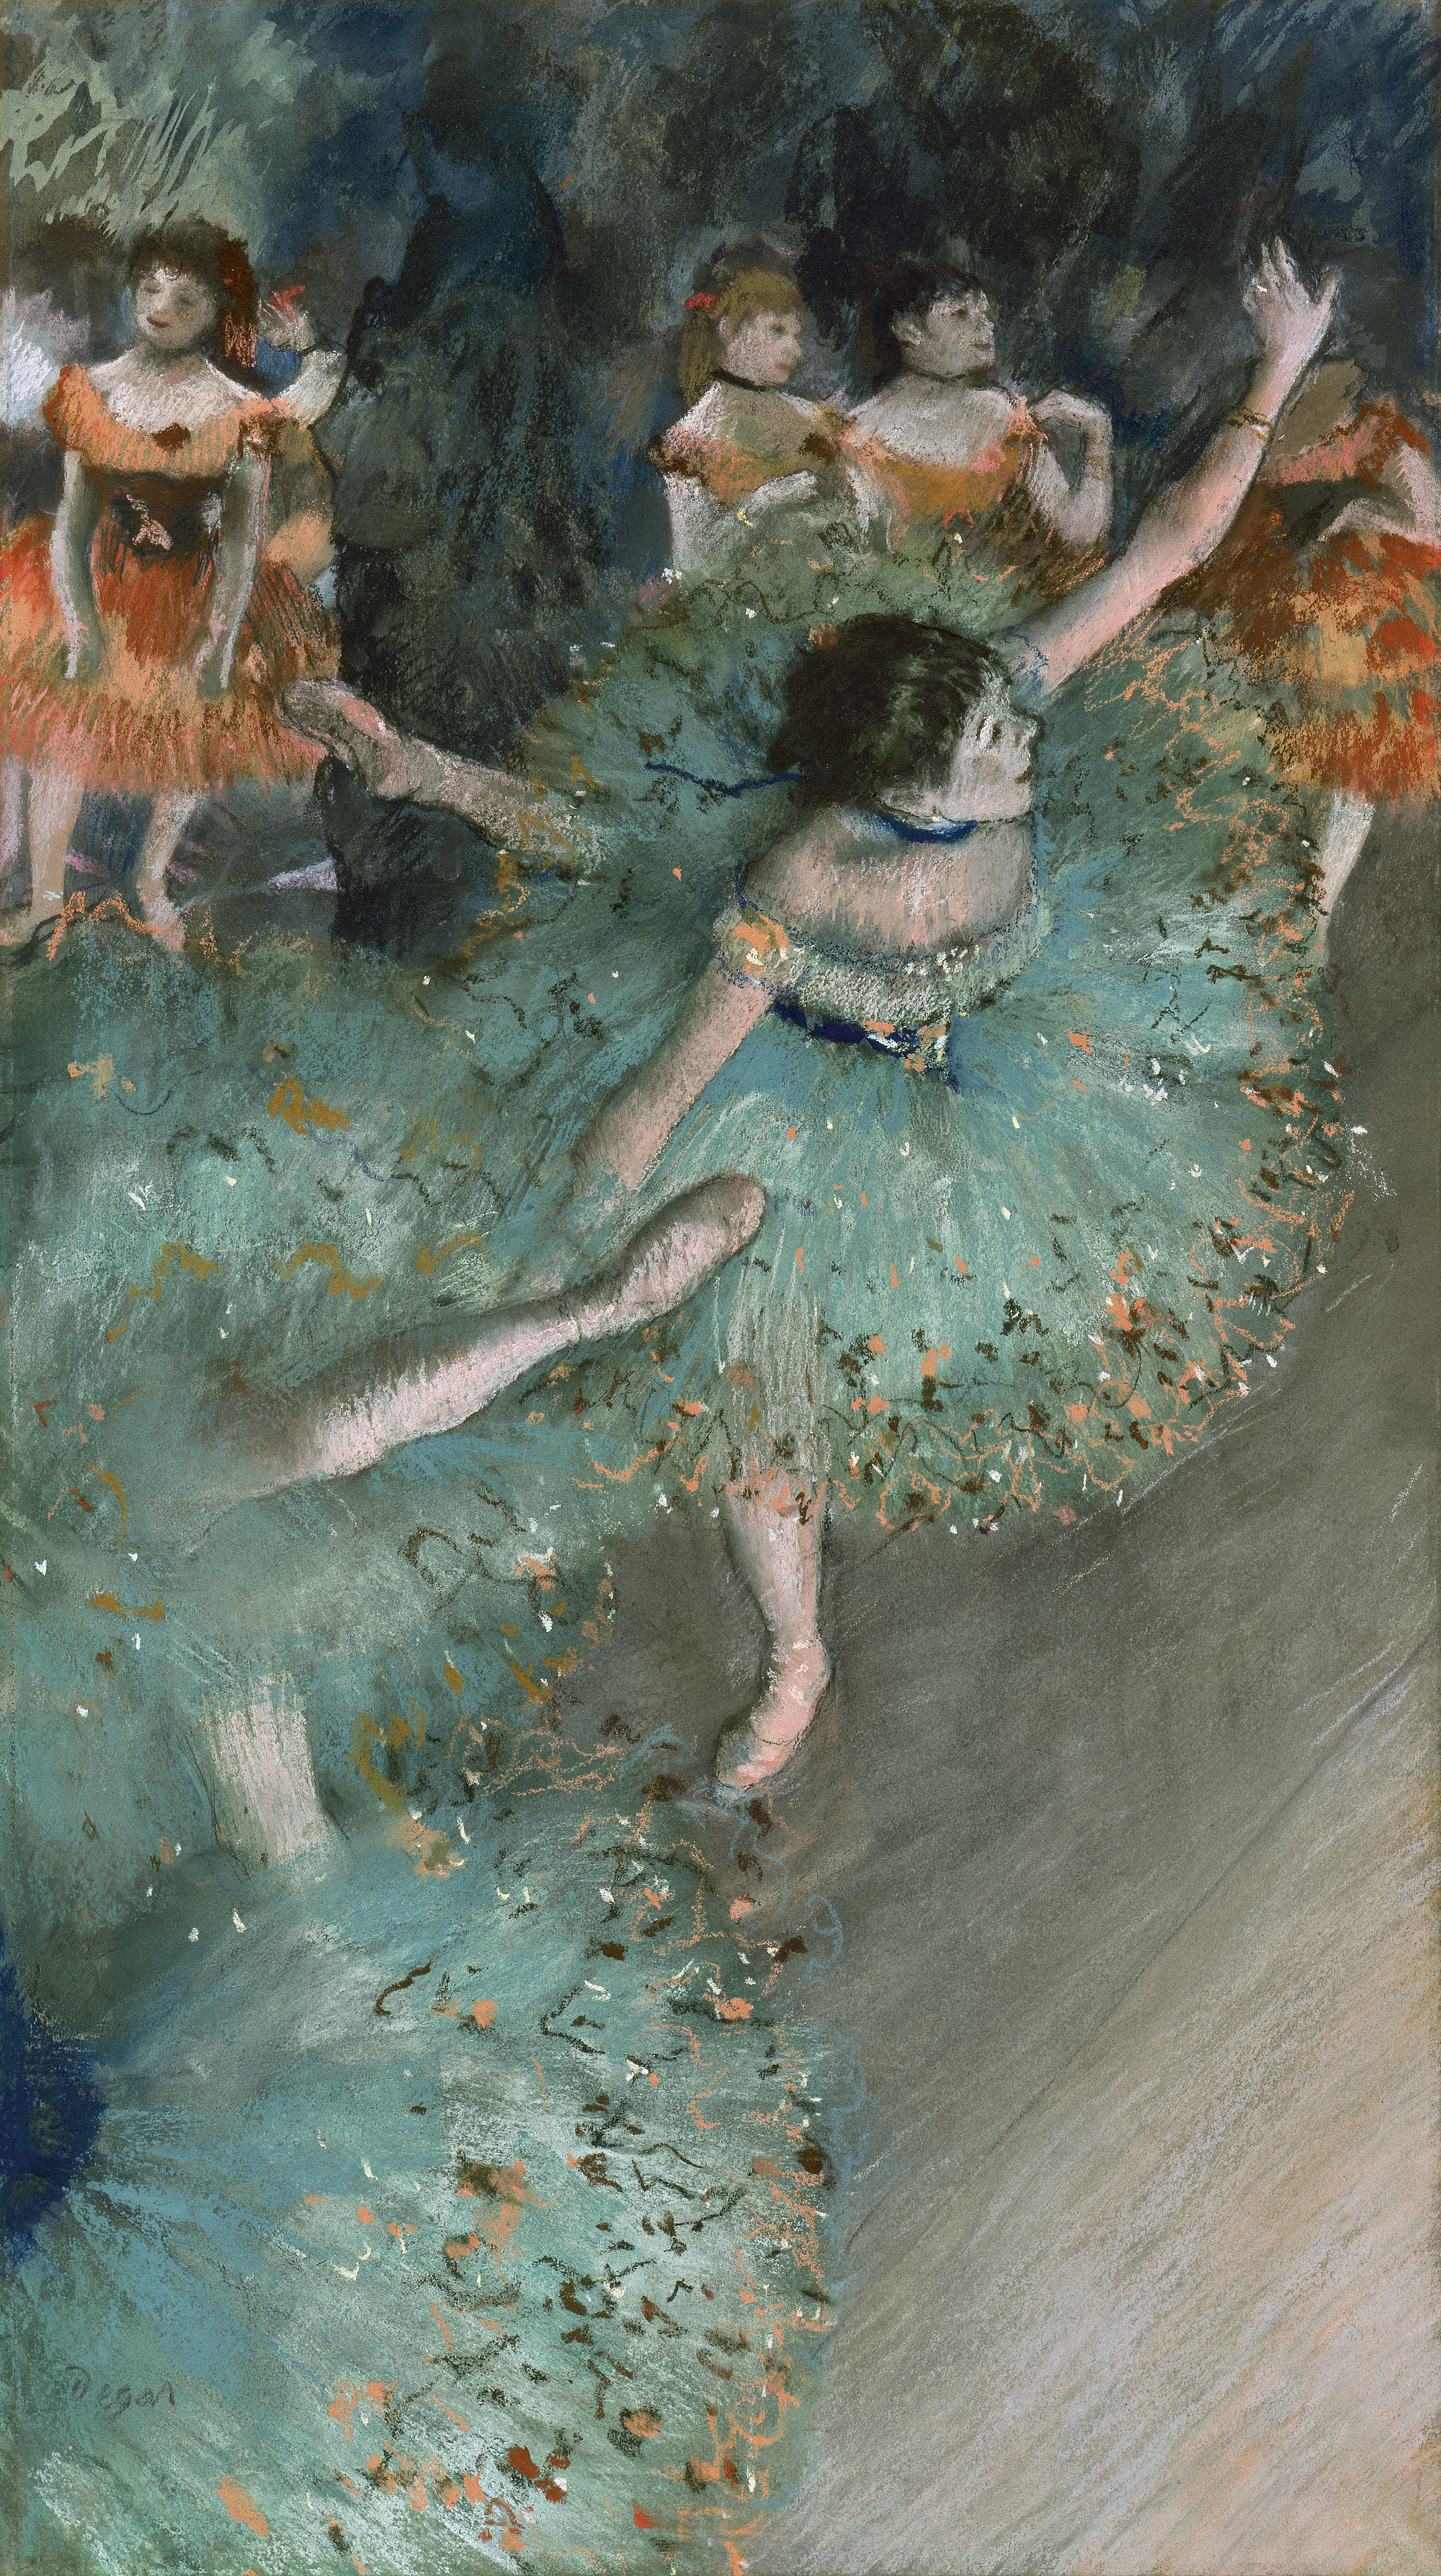 BAILARINA VERDE - Edgar Degas